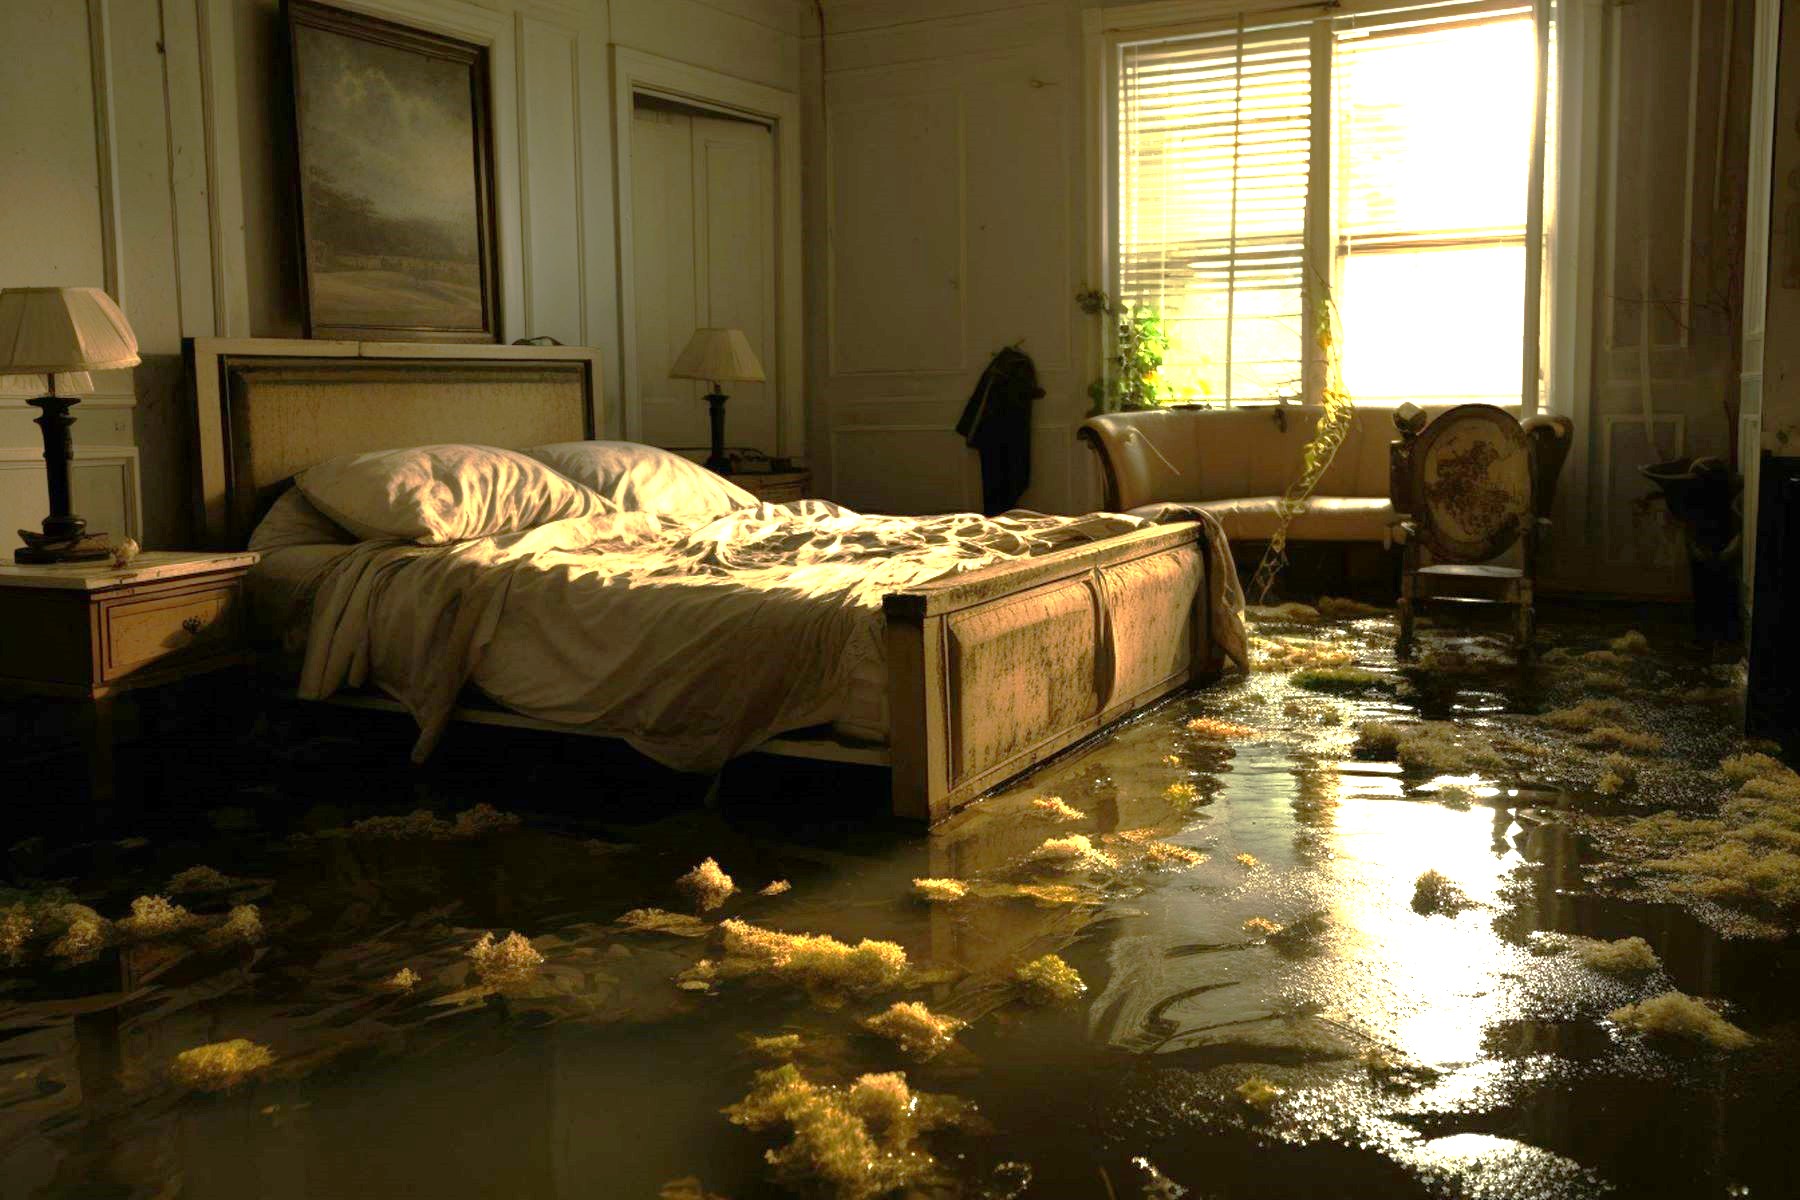 Water Damage in Bedroom